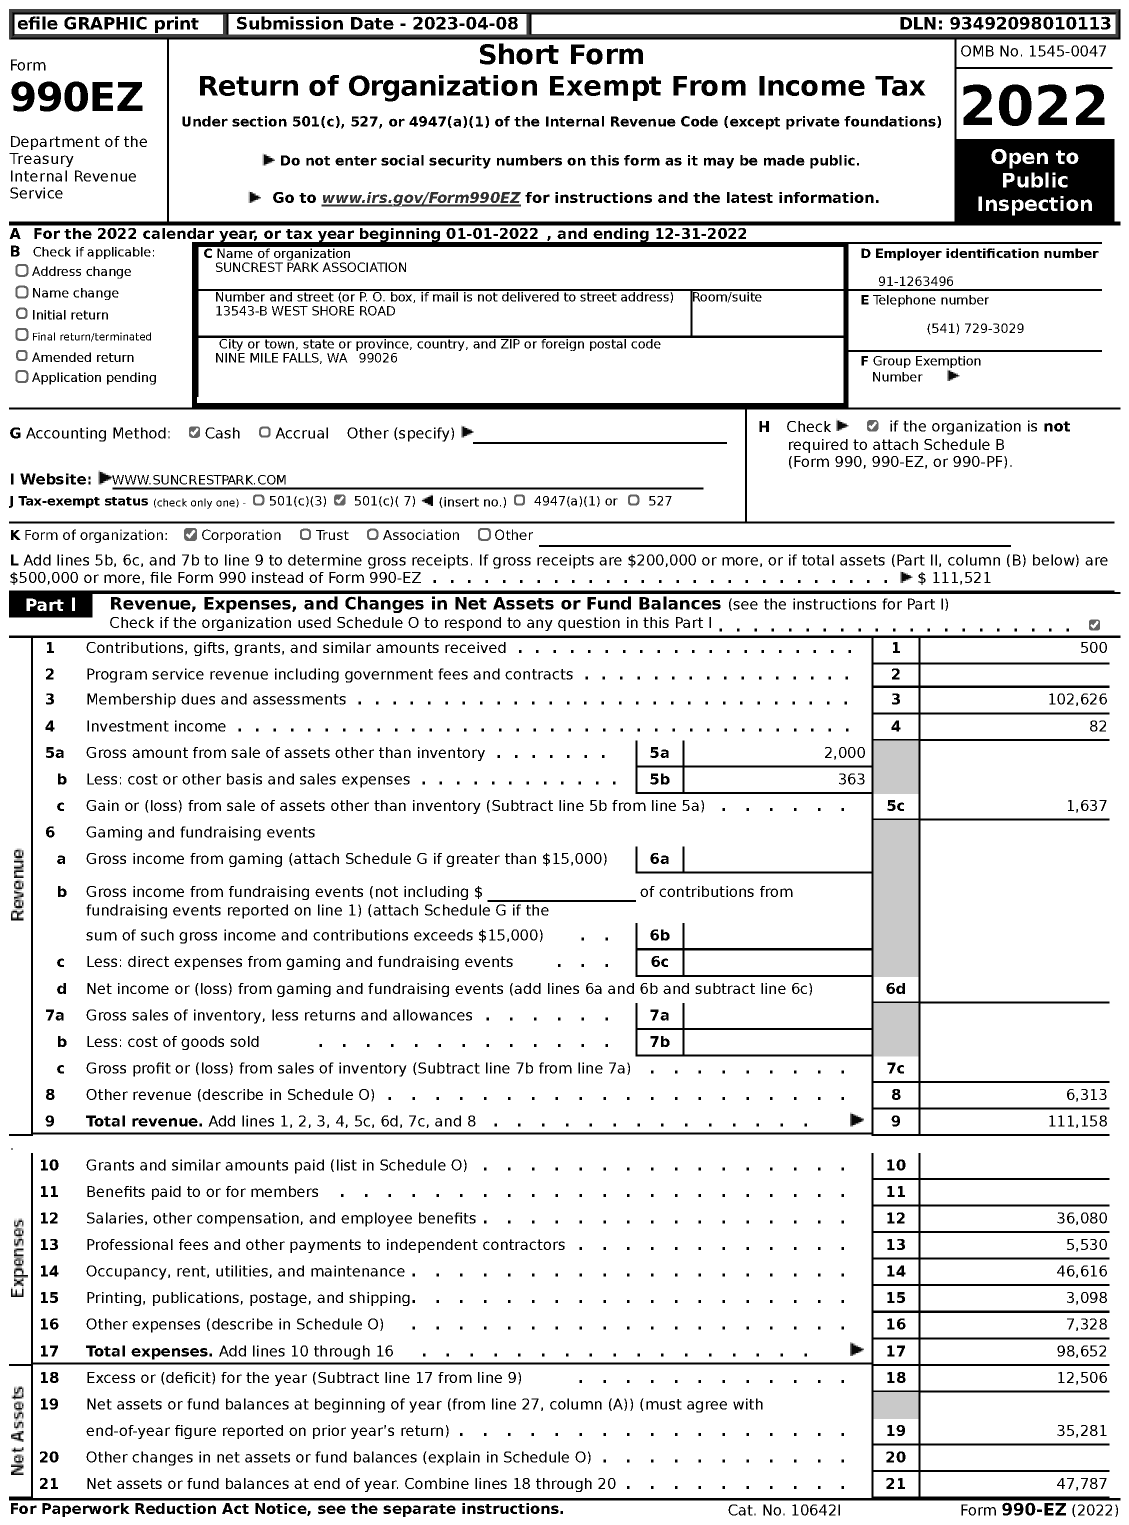 Image of first page of 2022 Form 990EZ for Suncrest Park Association